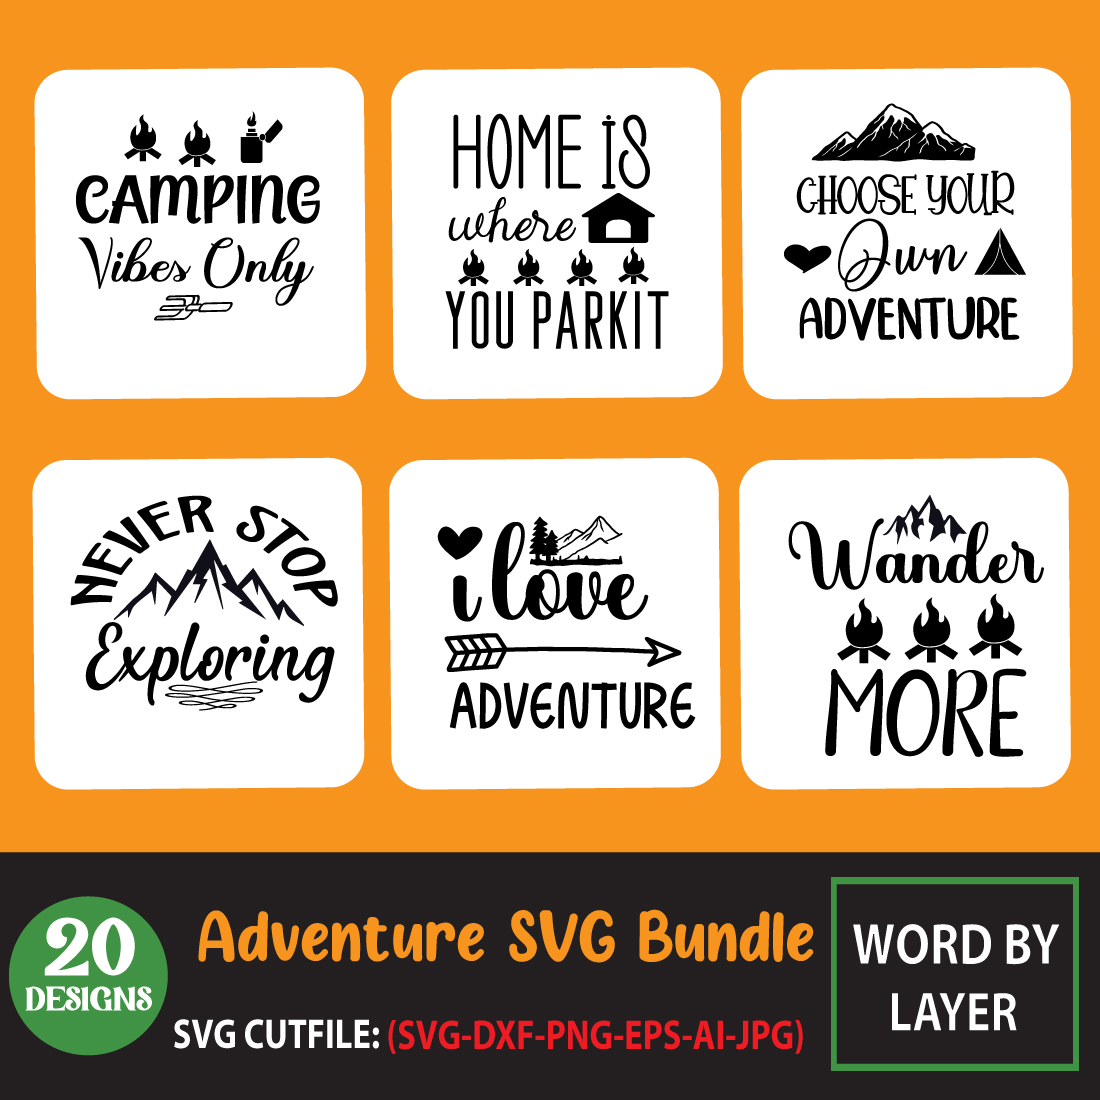 Adventure SVG Bundle cover image.